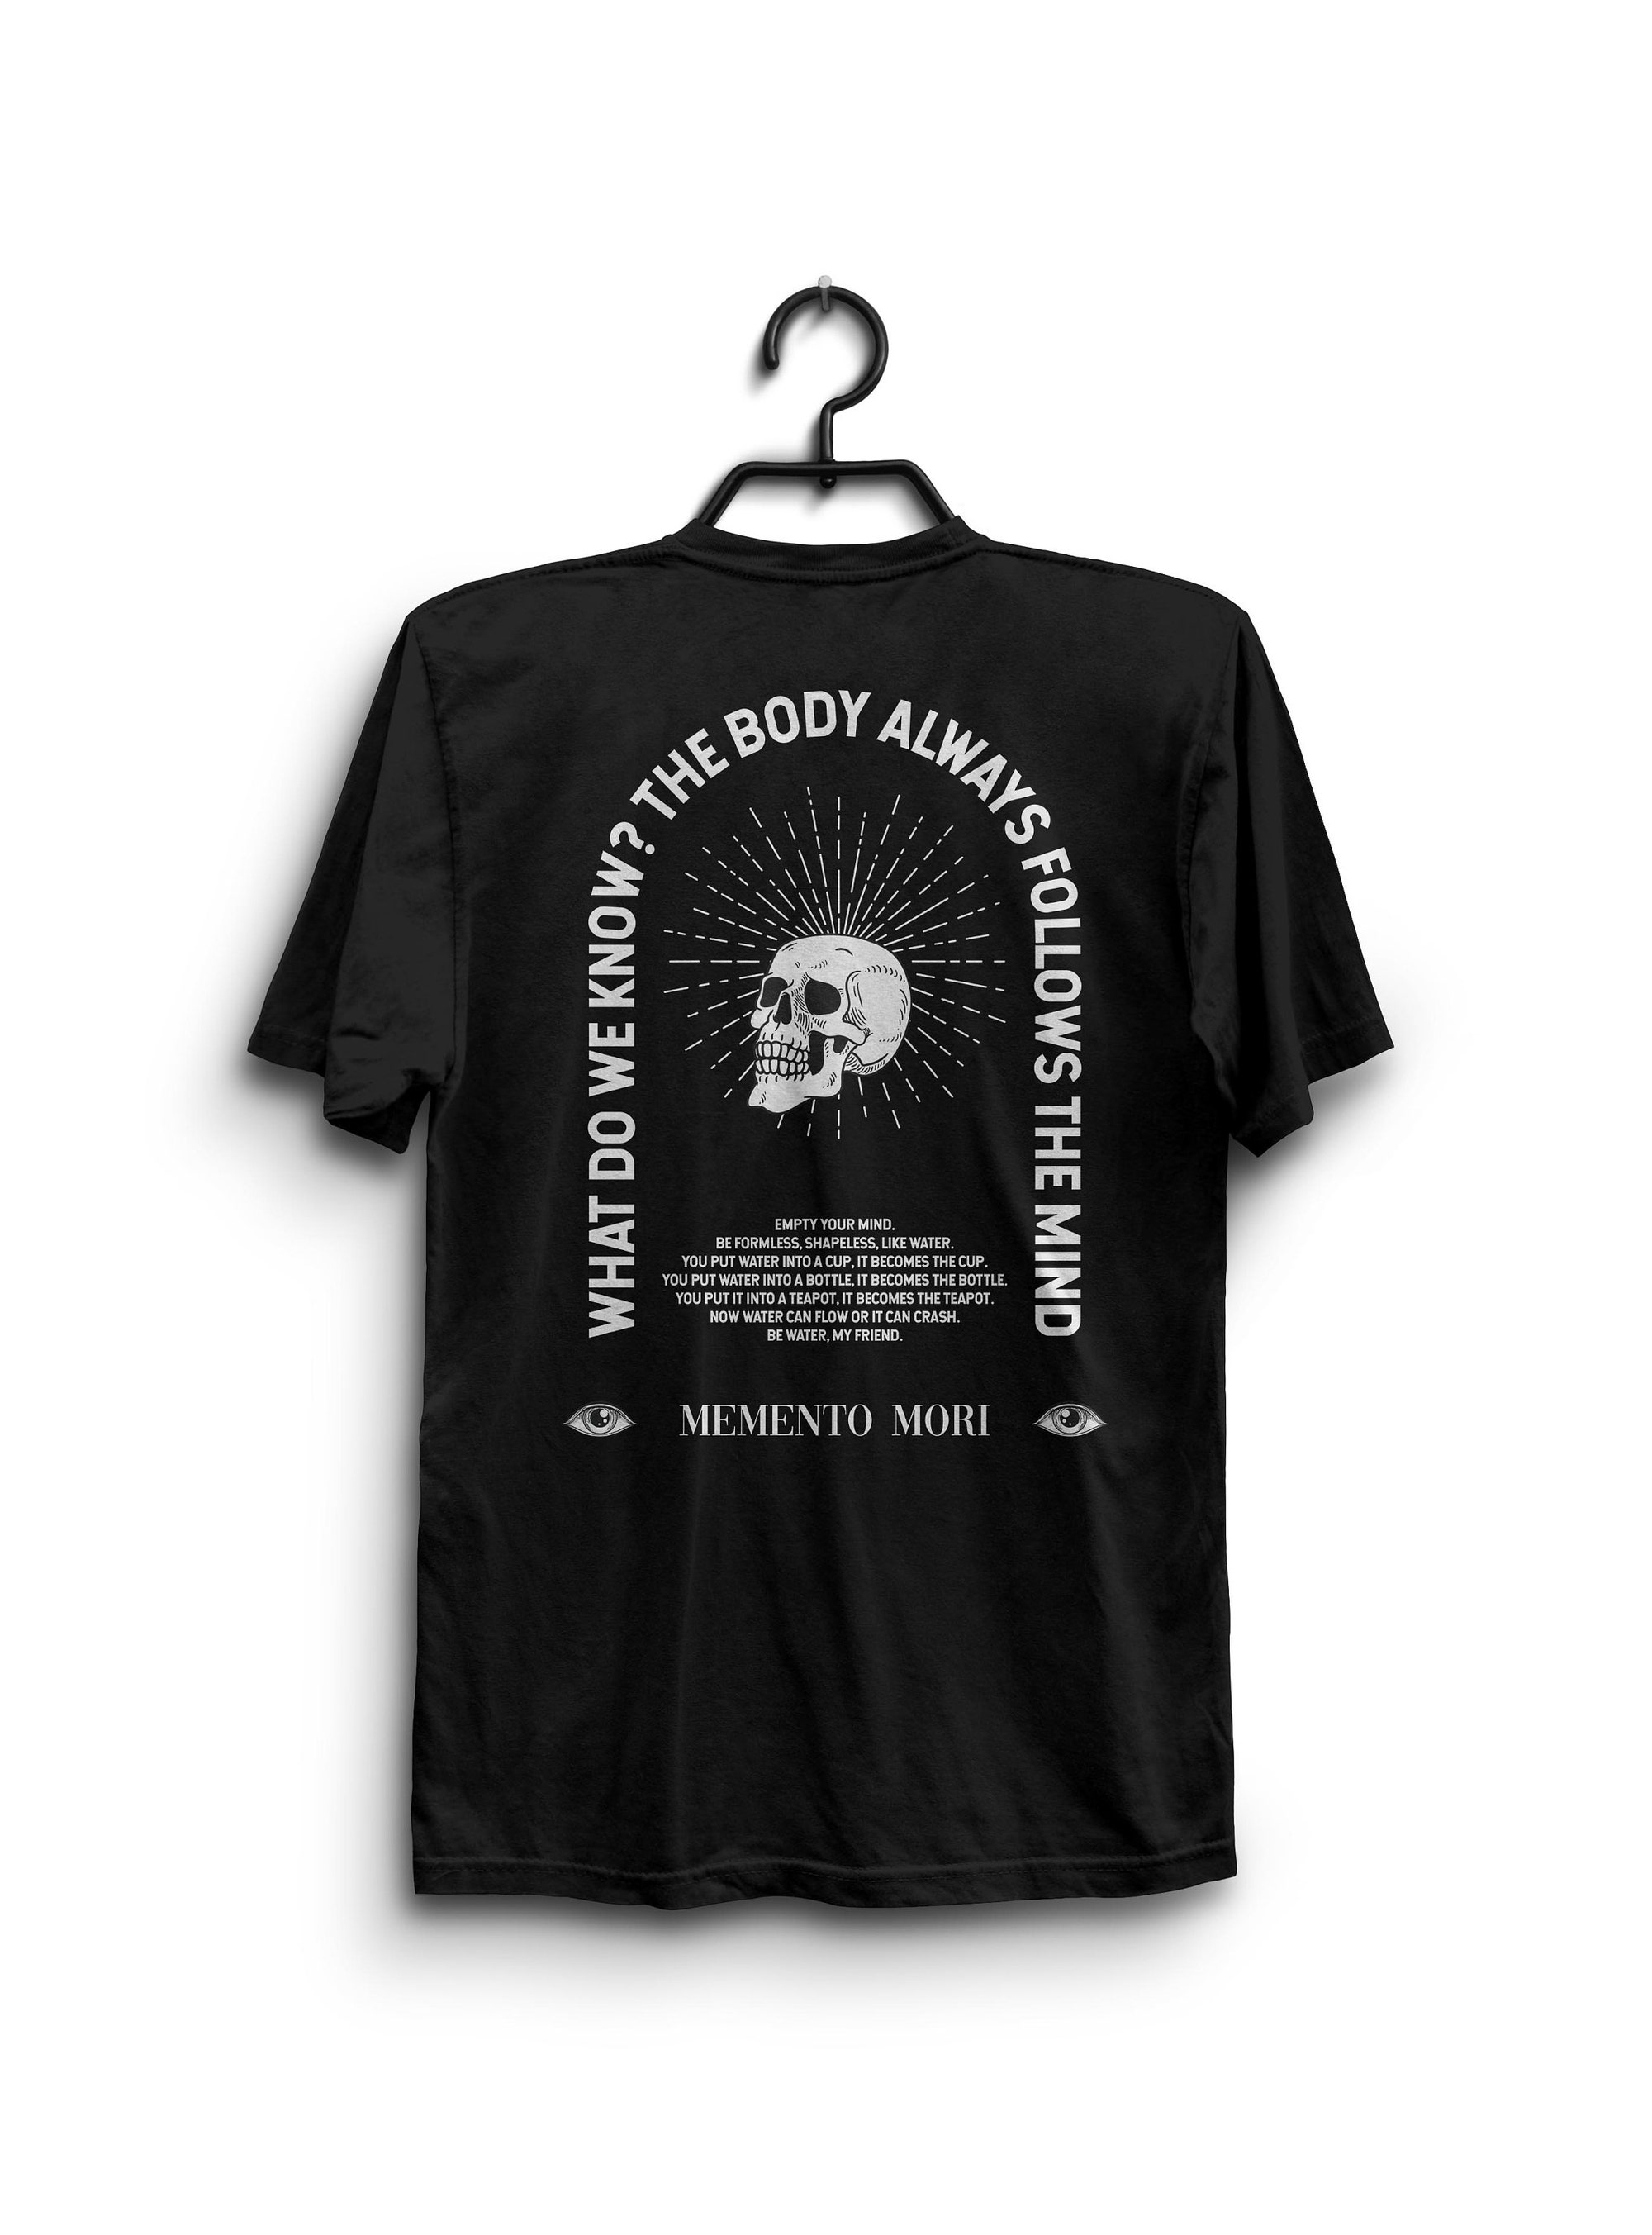 Memento mori shirt, skull t shirt, Bruce lee quote